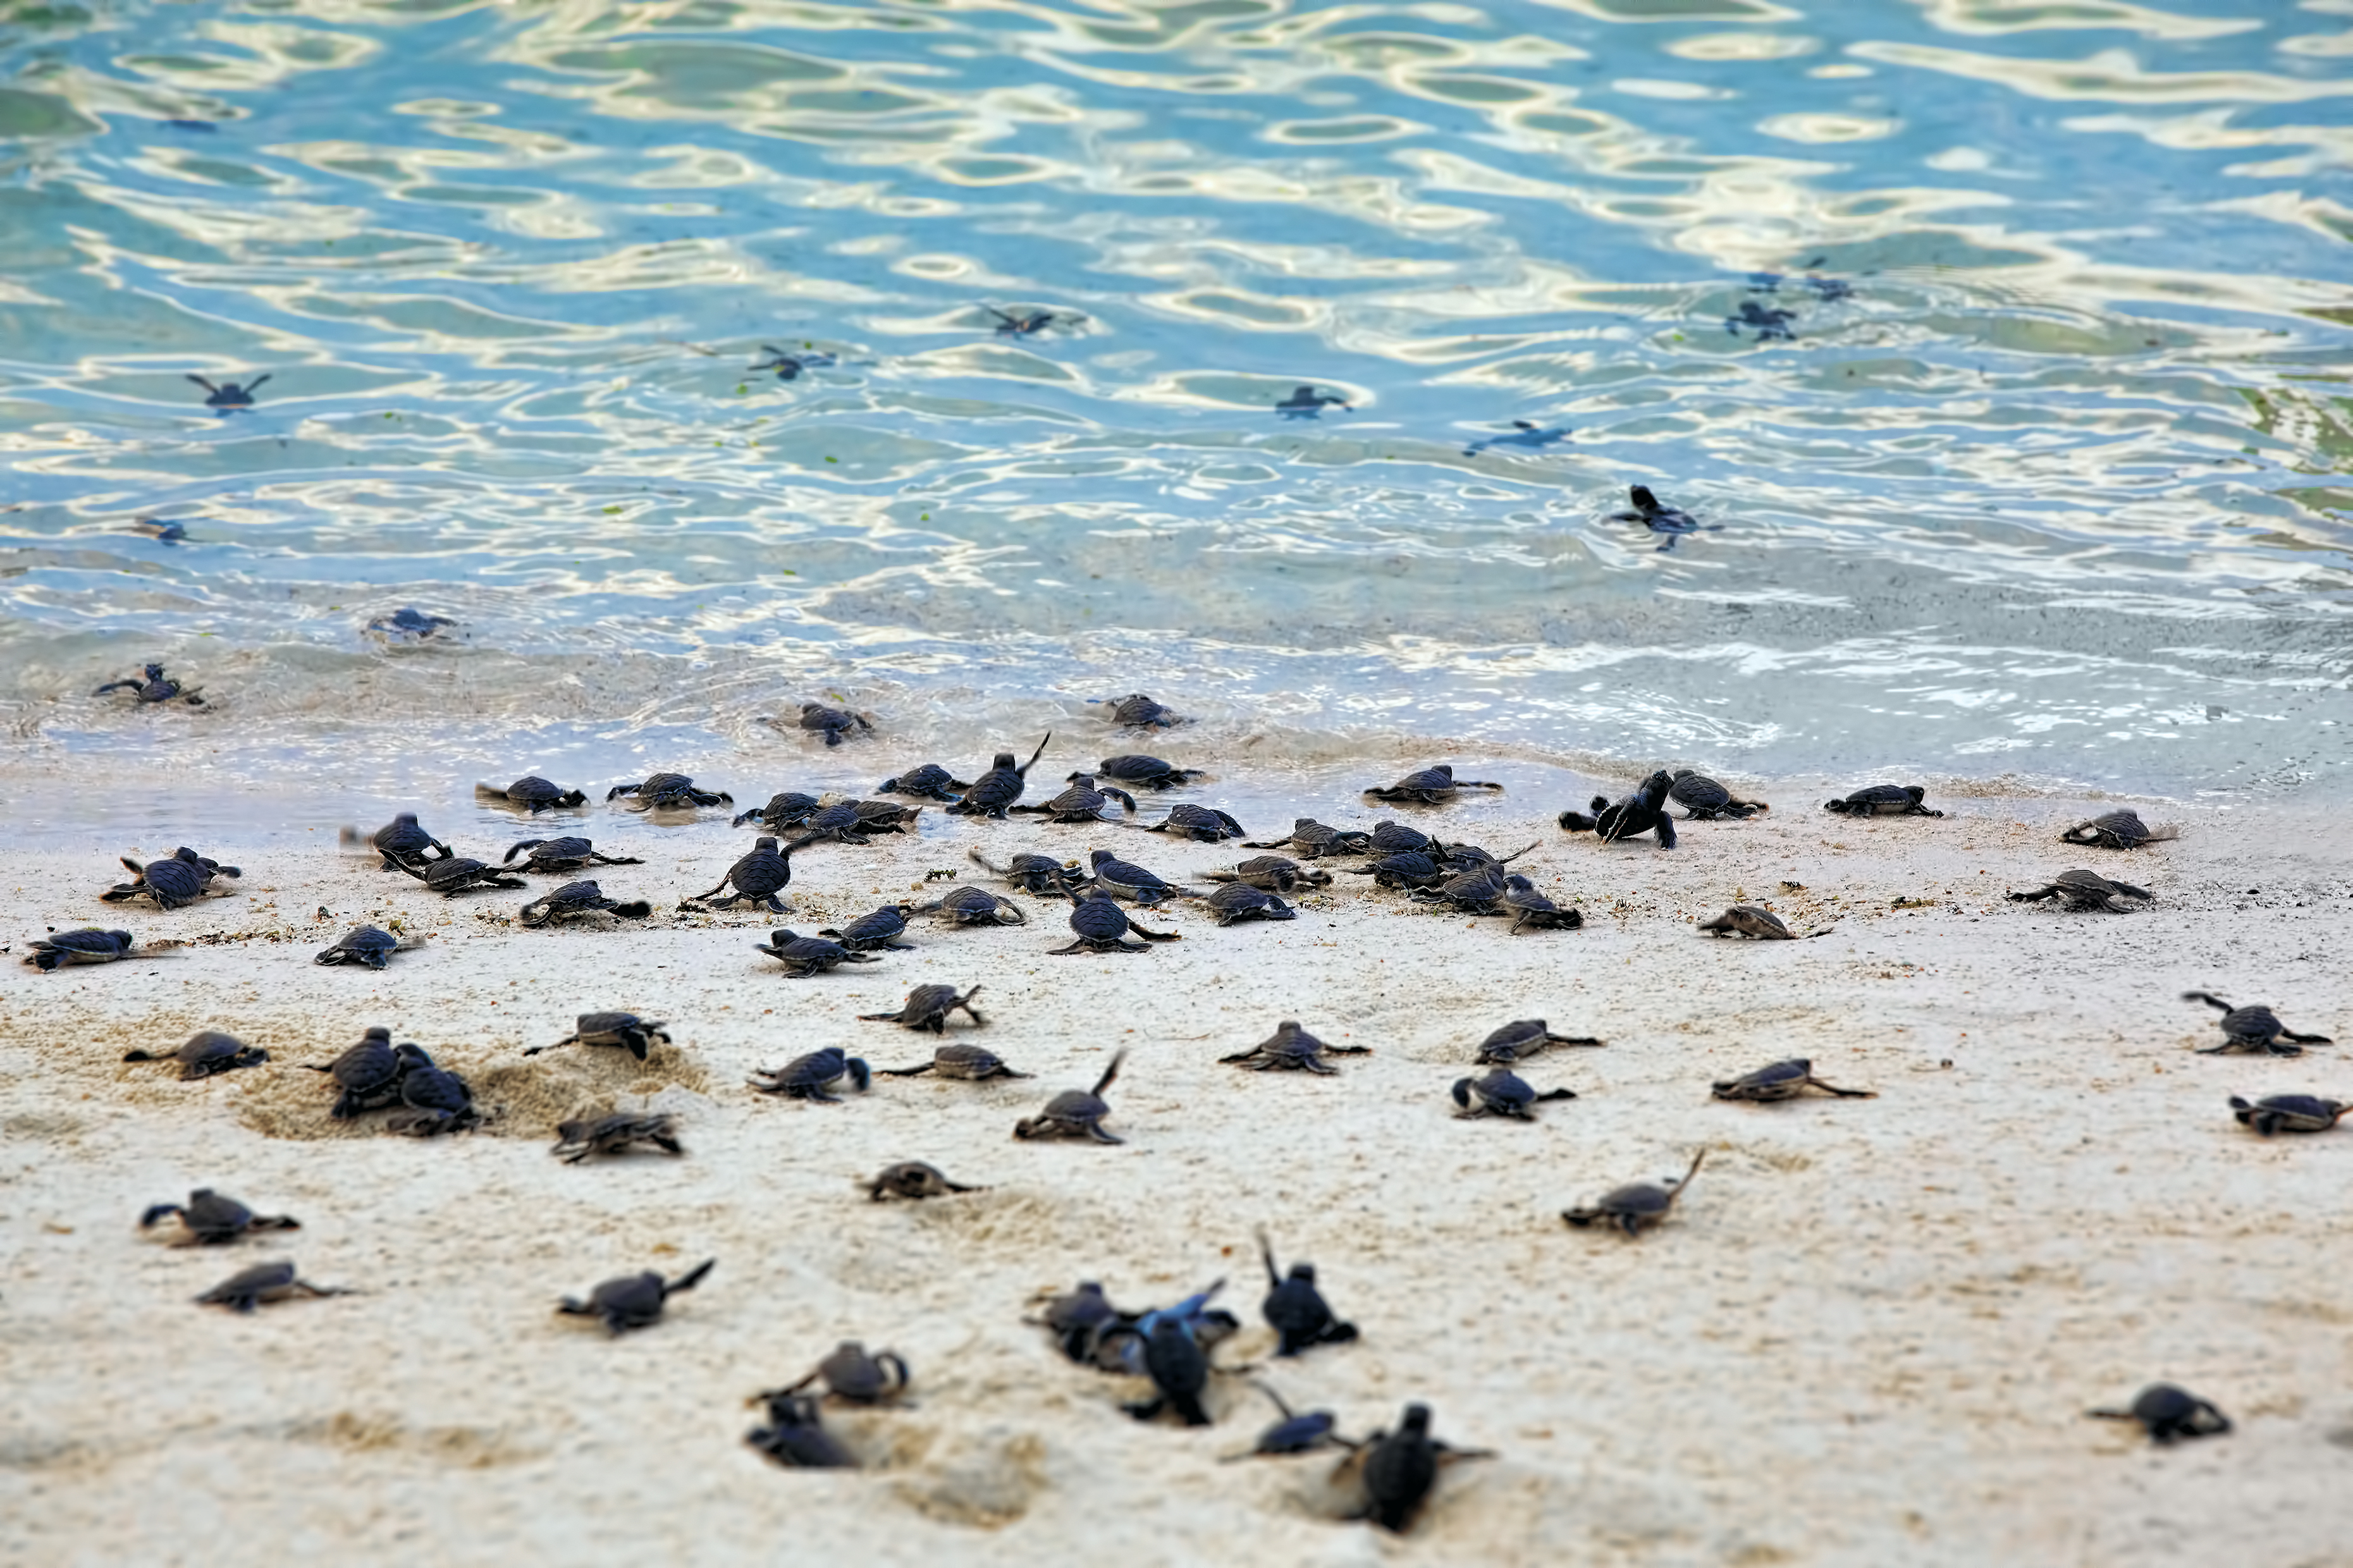 Protect Nesting Beaches Turtle Island Restoration Network